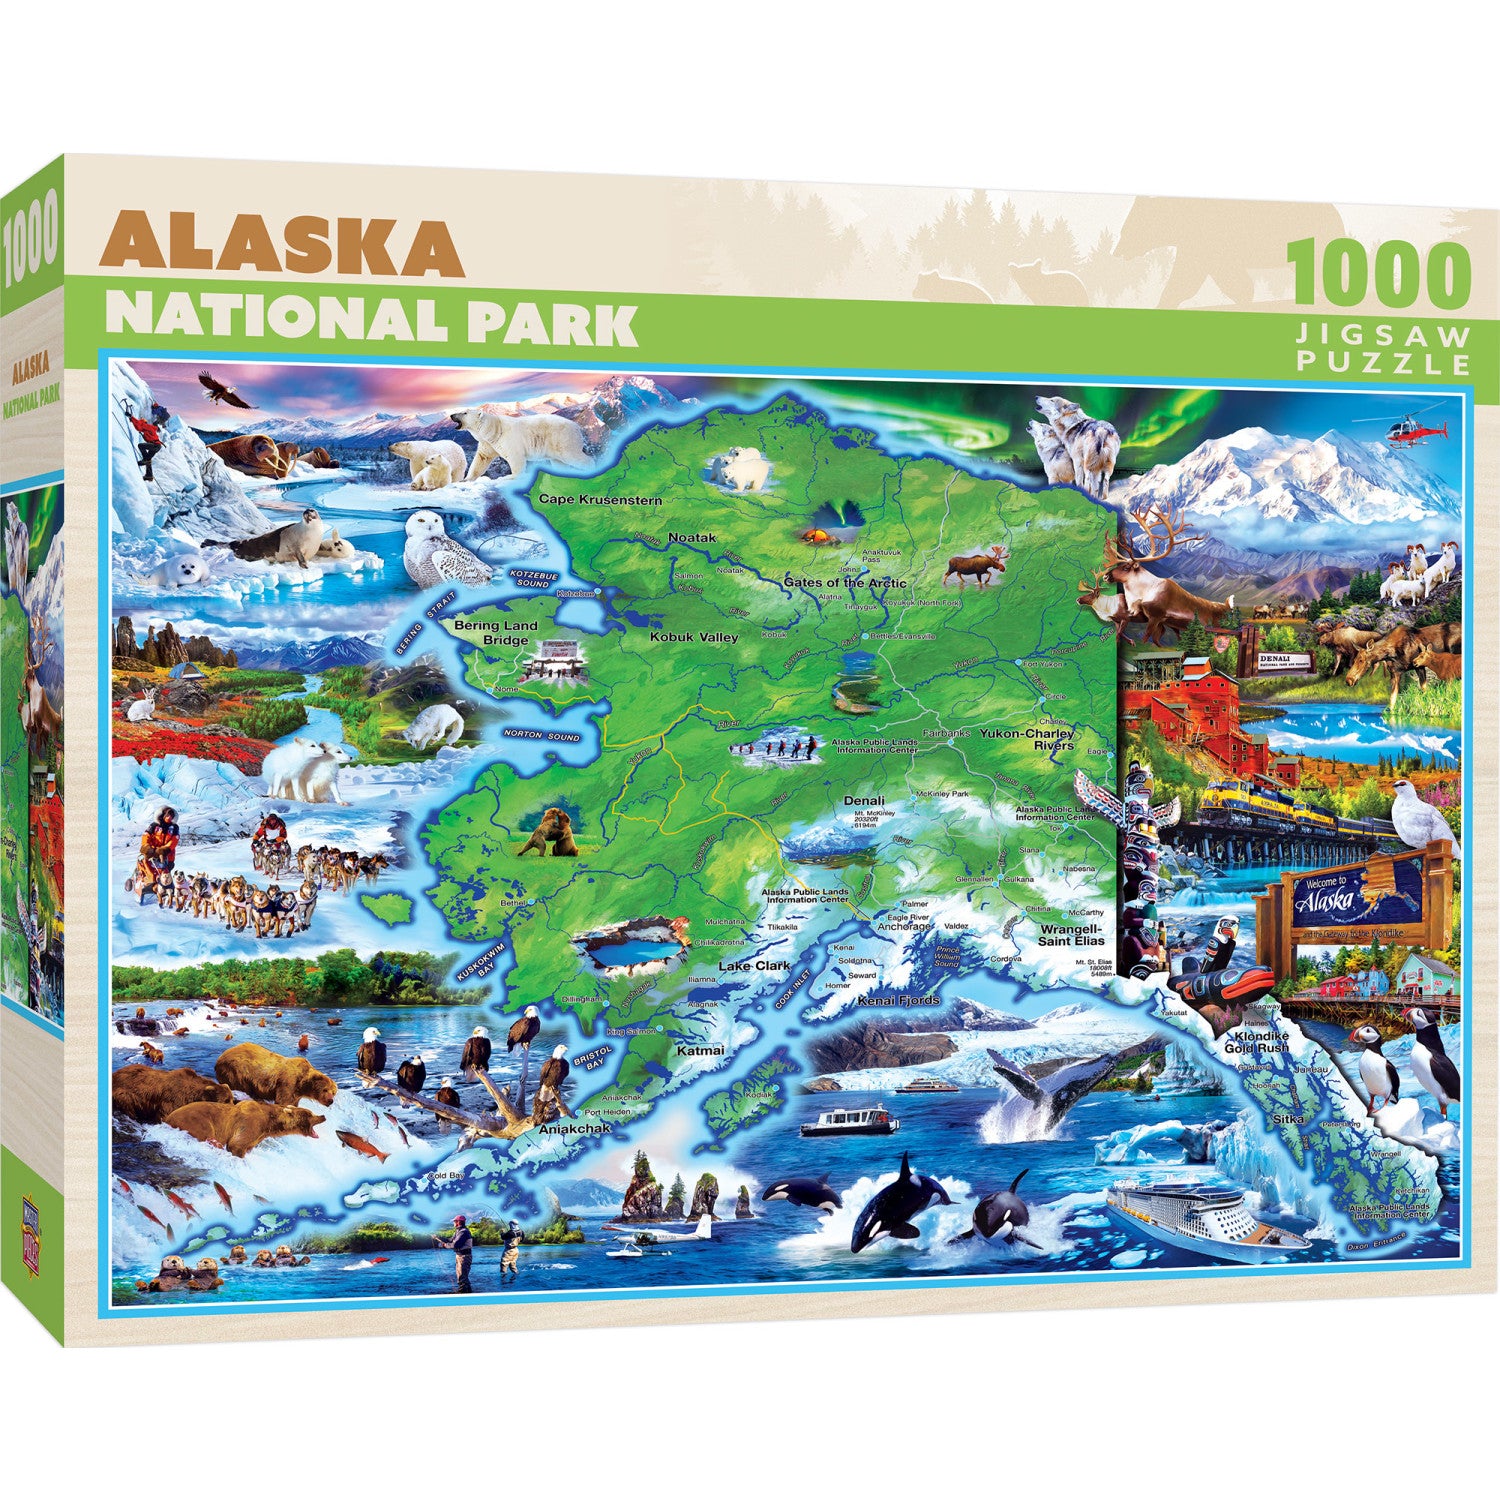 Alaska National Park 1000 Piece Jigsaw Puzzle